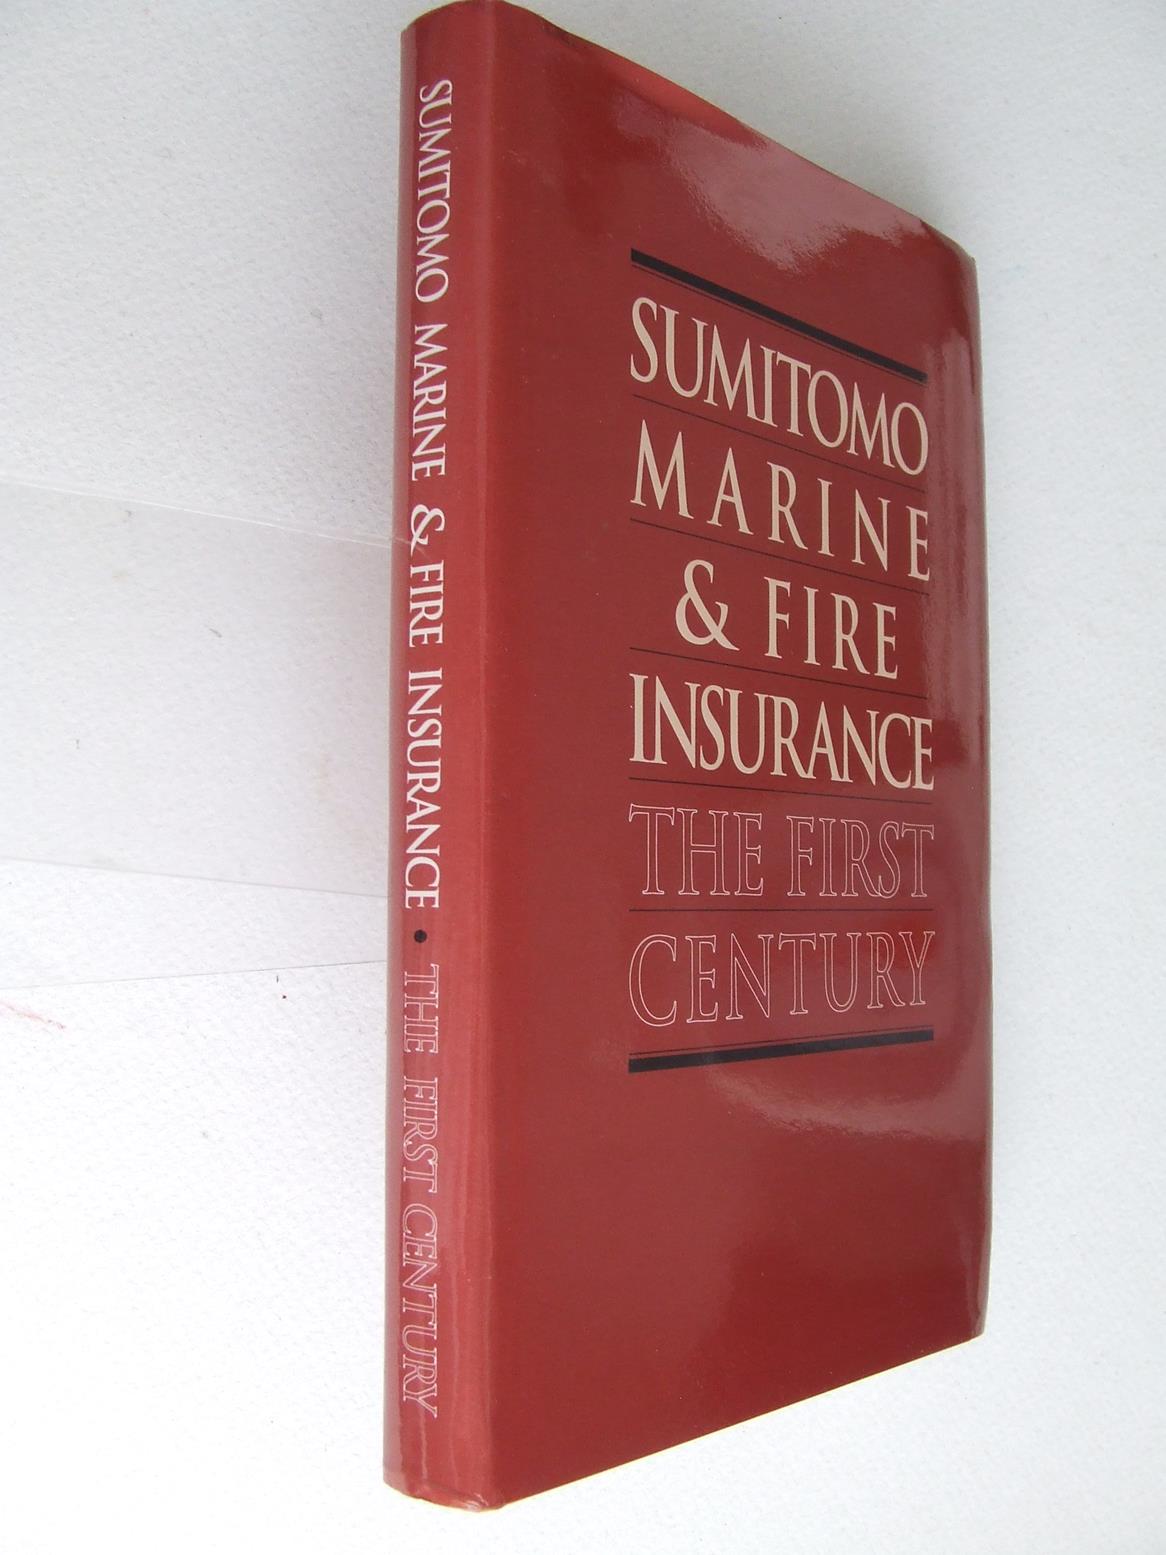 Sumitomo Marine & Fire Insurance, the first century